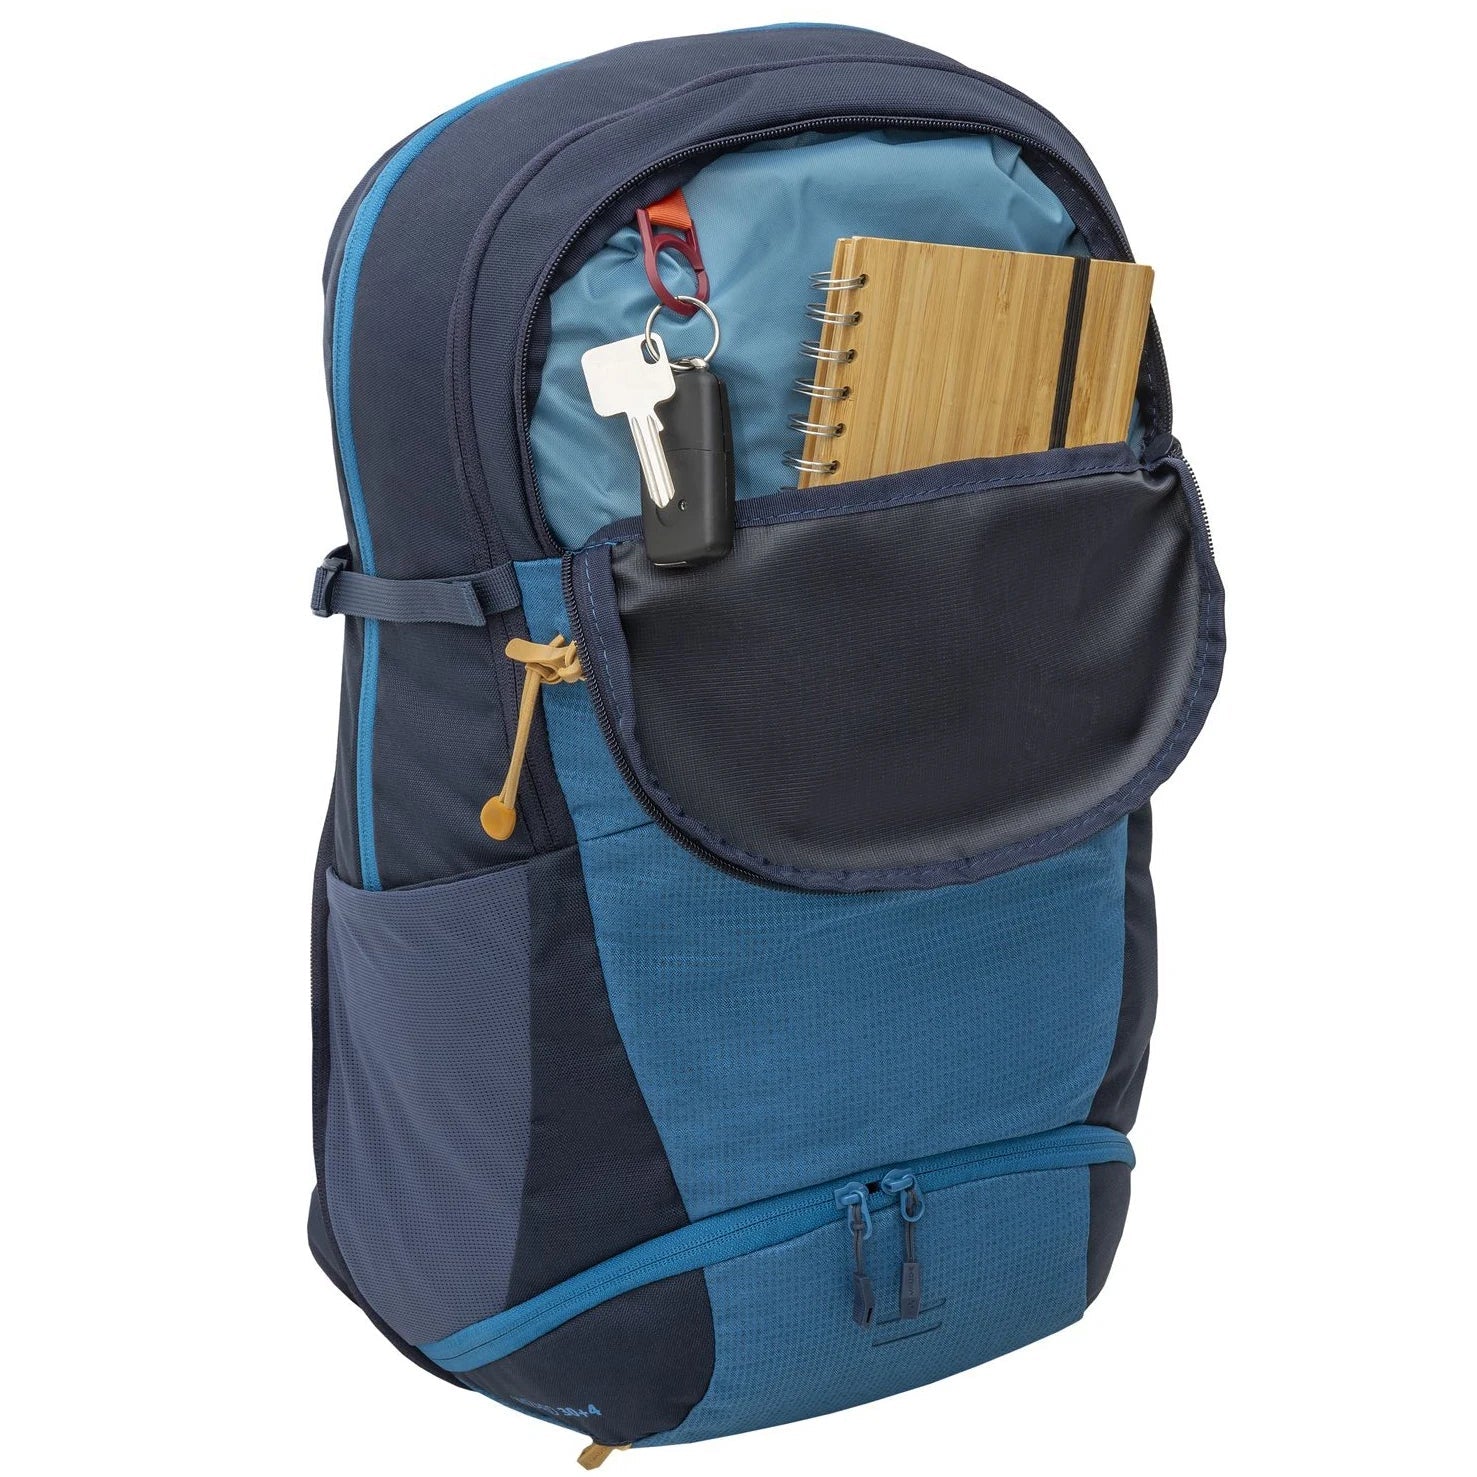 Vaude Backpacks Wizard 30+4 Backpack 46 cm - kingfisher